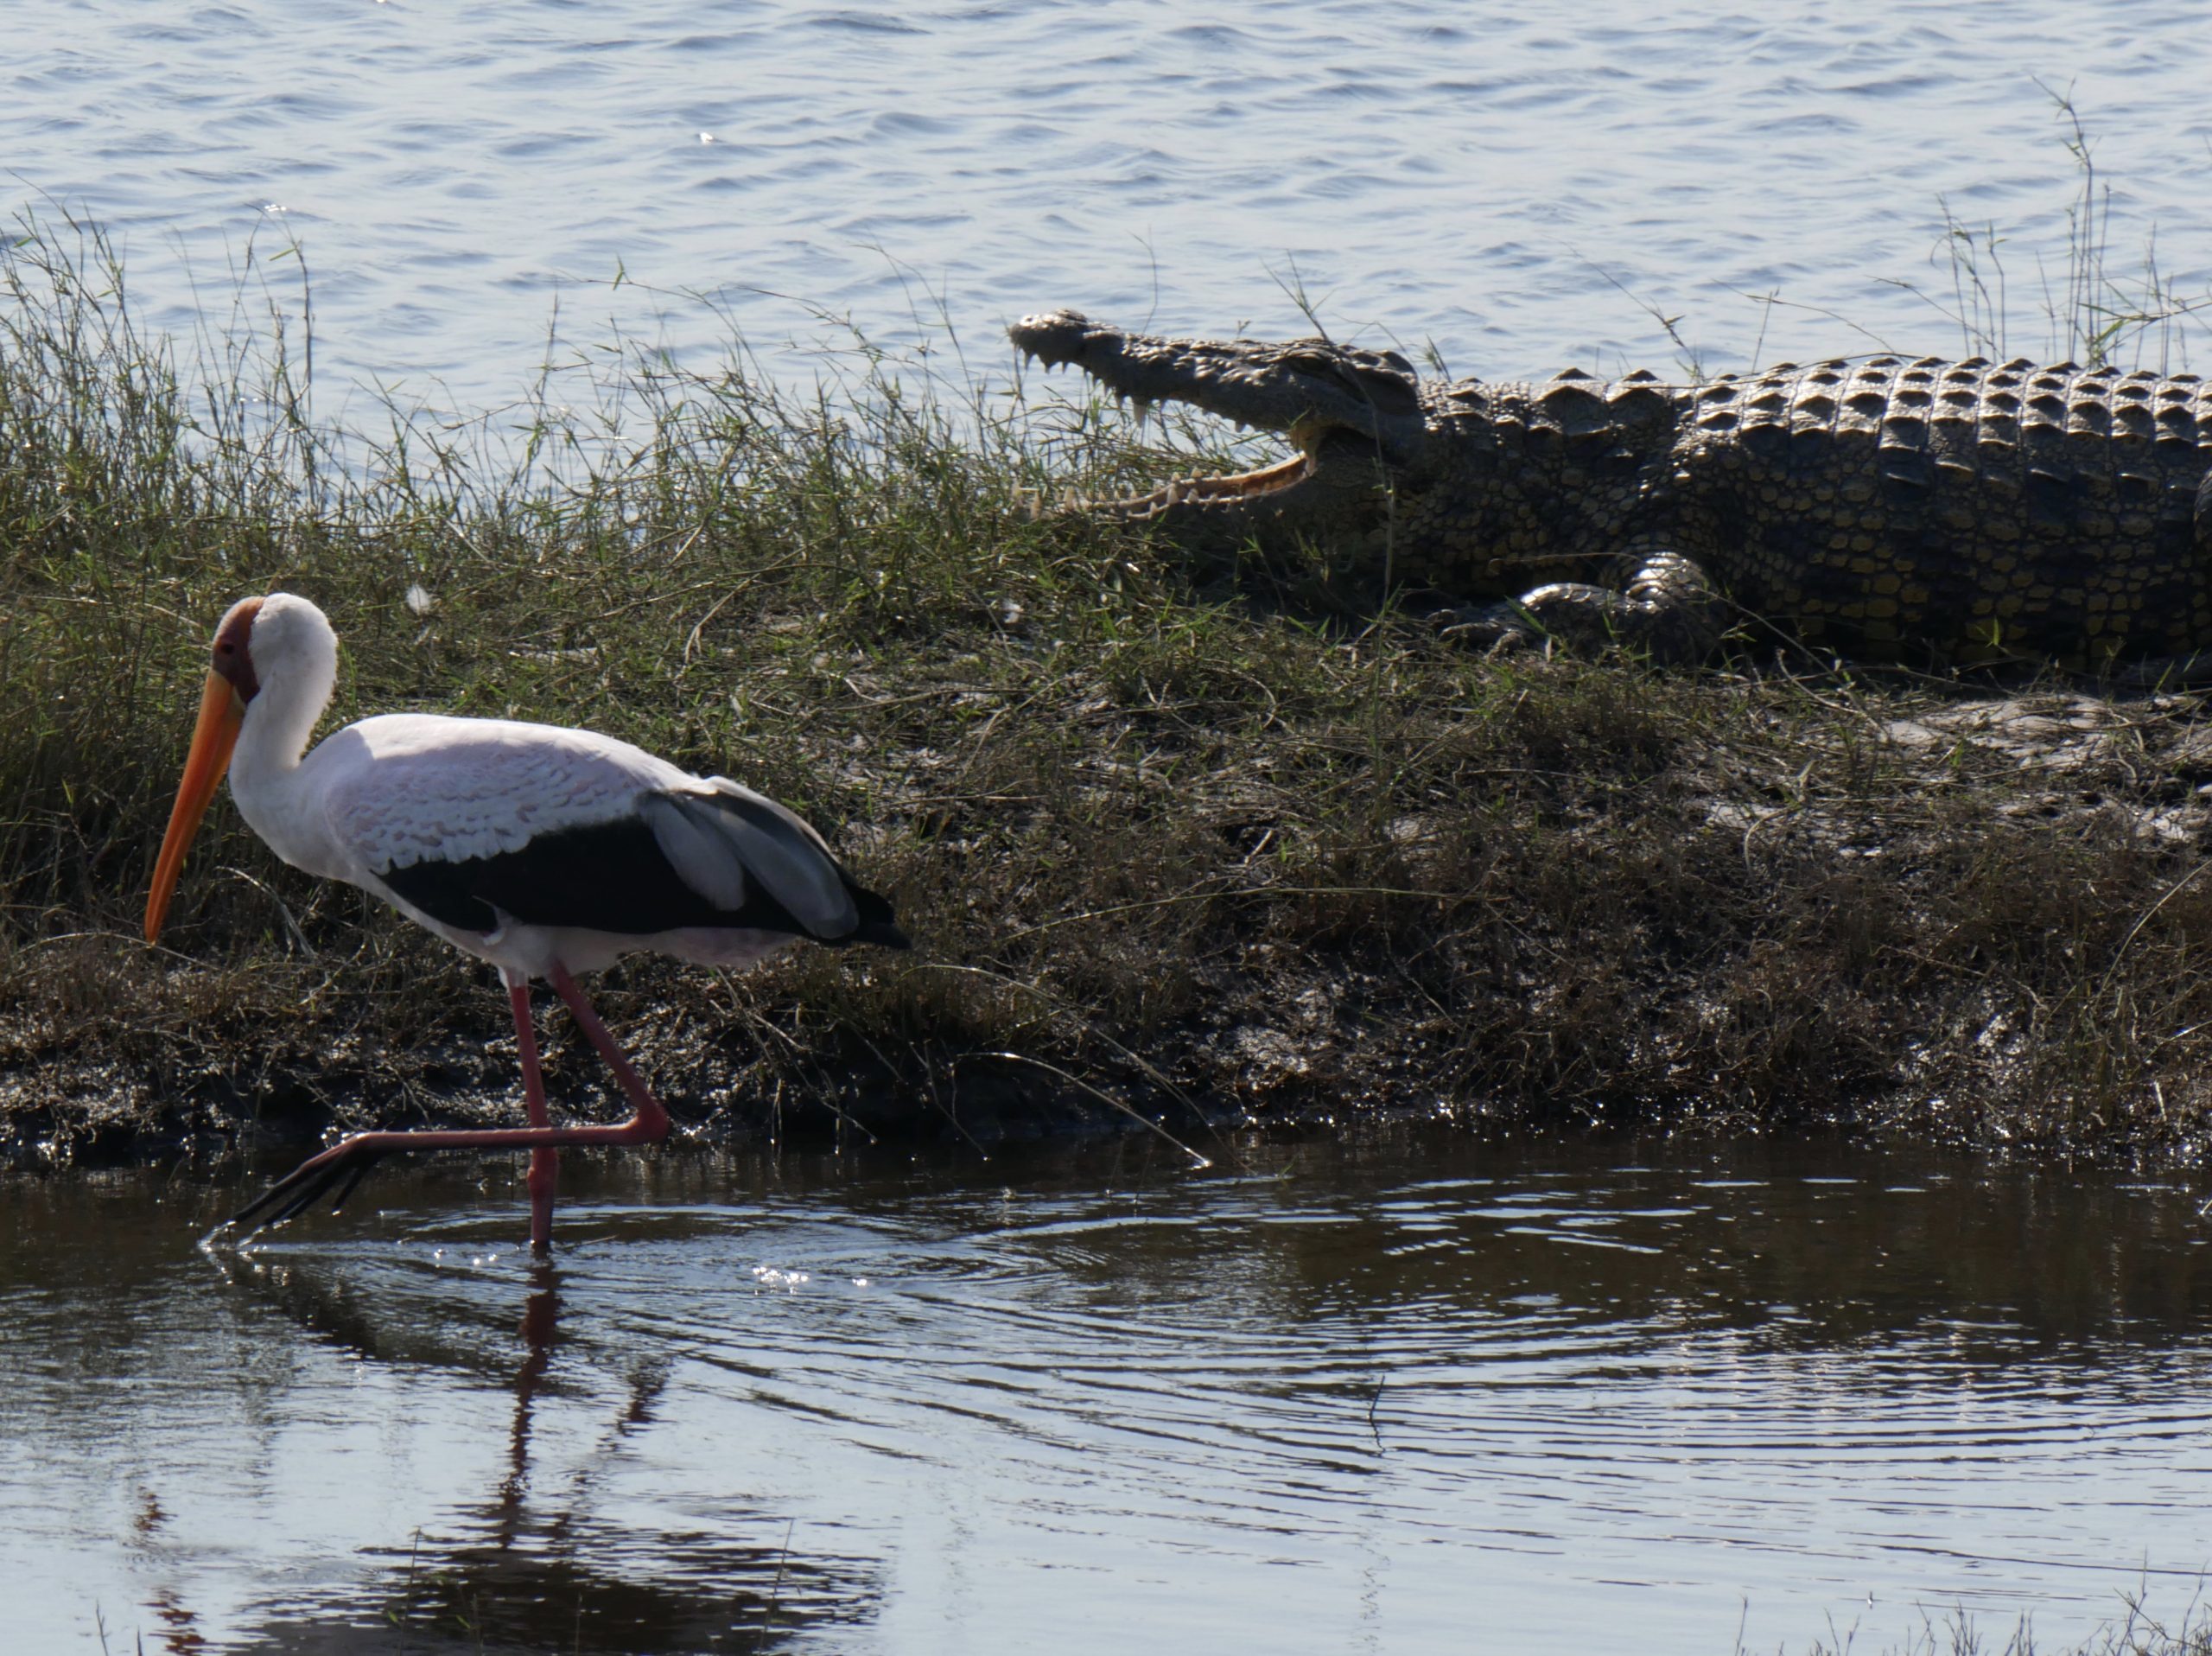 Crocodile and an oblivious wading bird